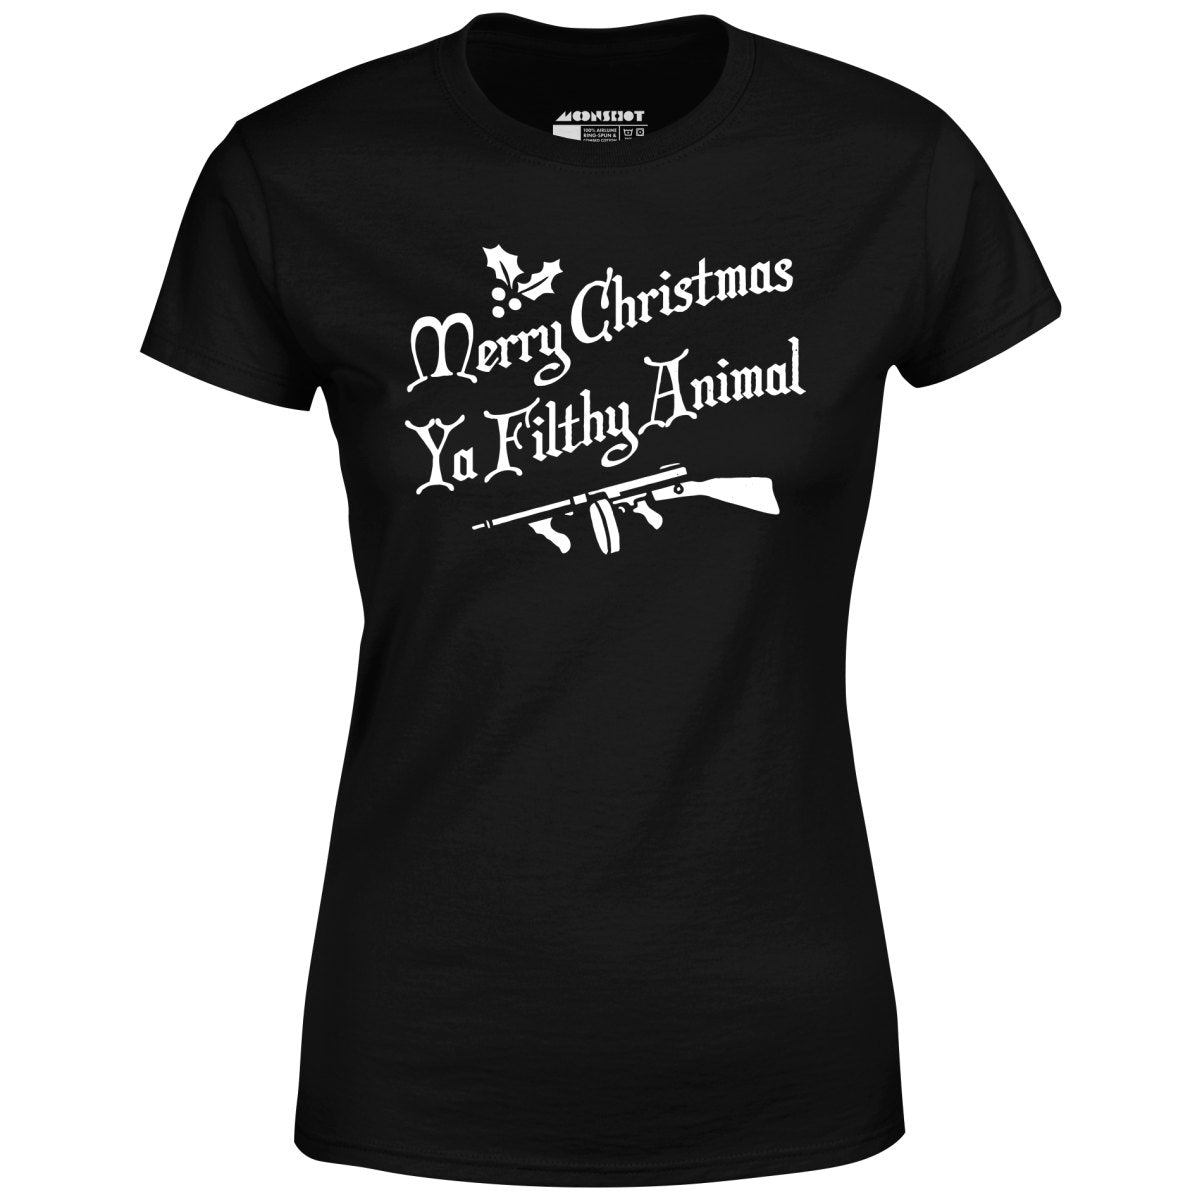 Merry Christmas Ya Filthy Animal - Women's T-Shirt